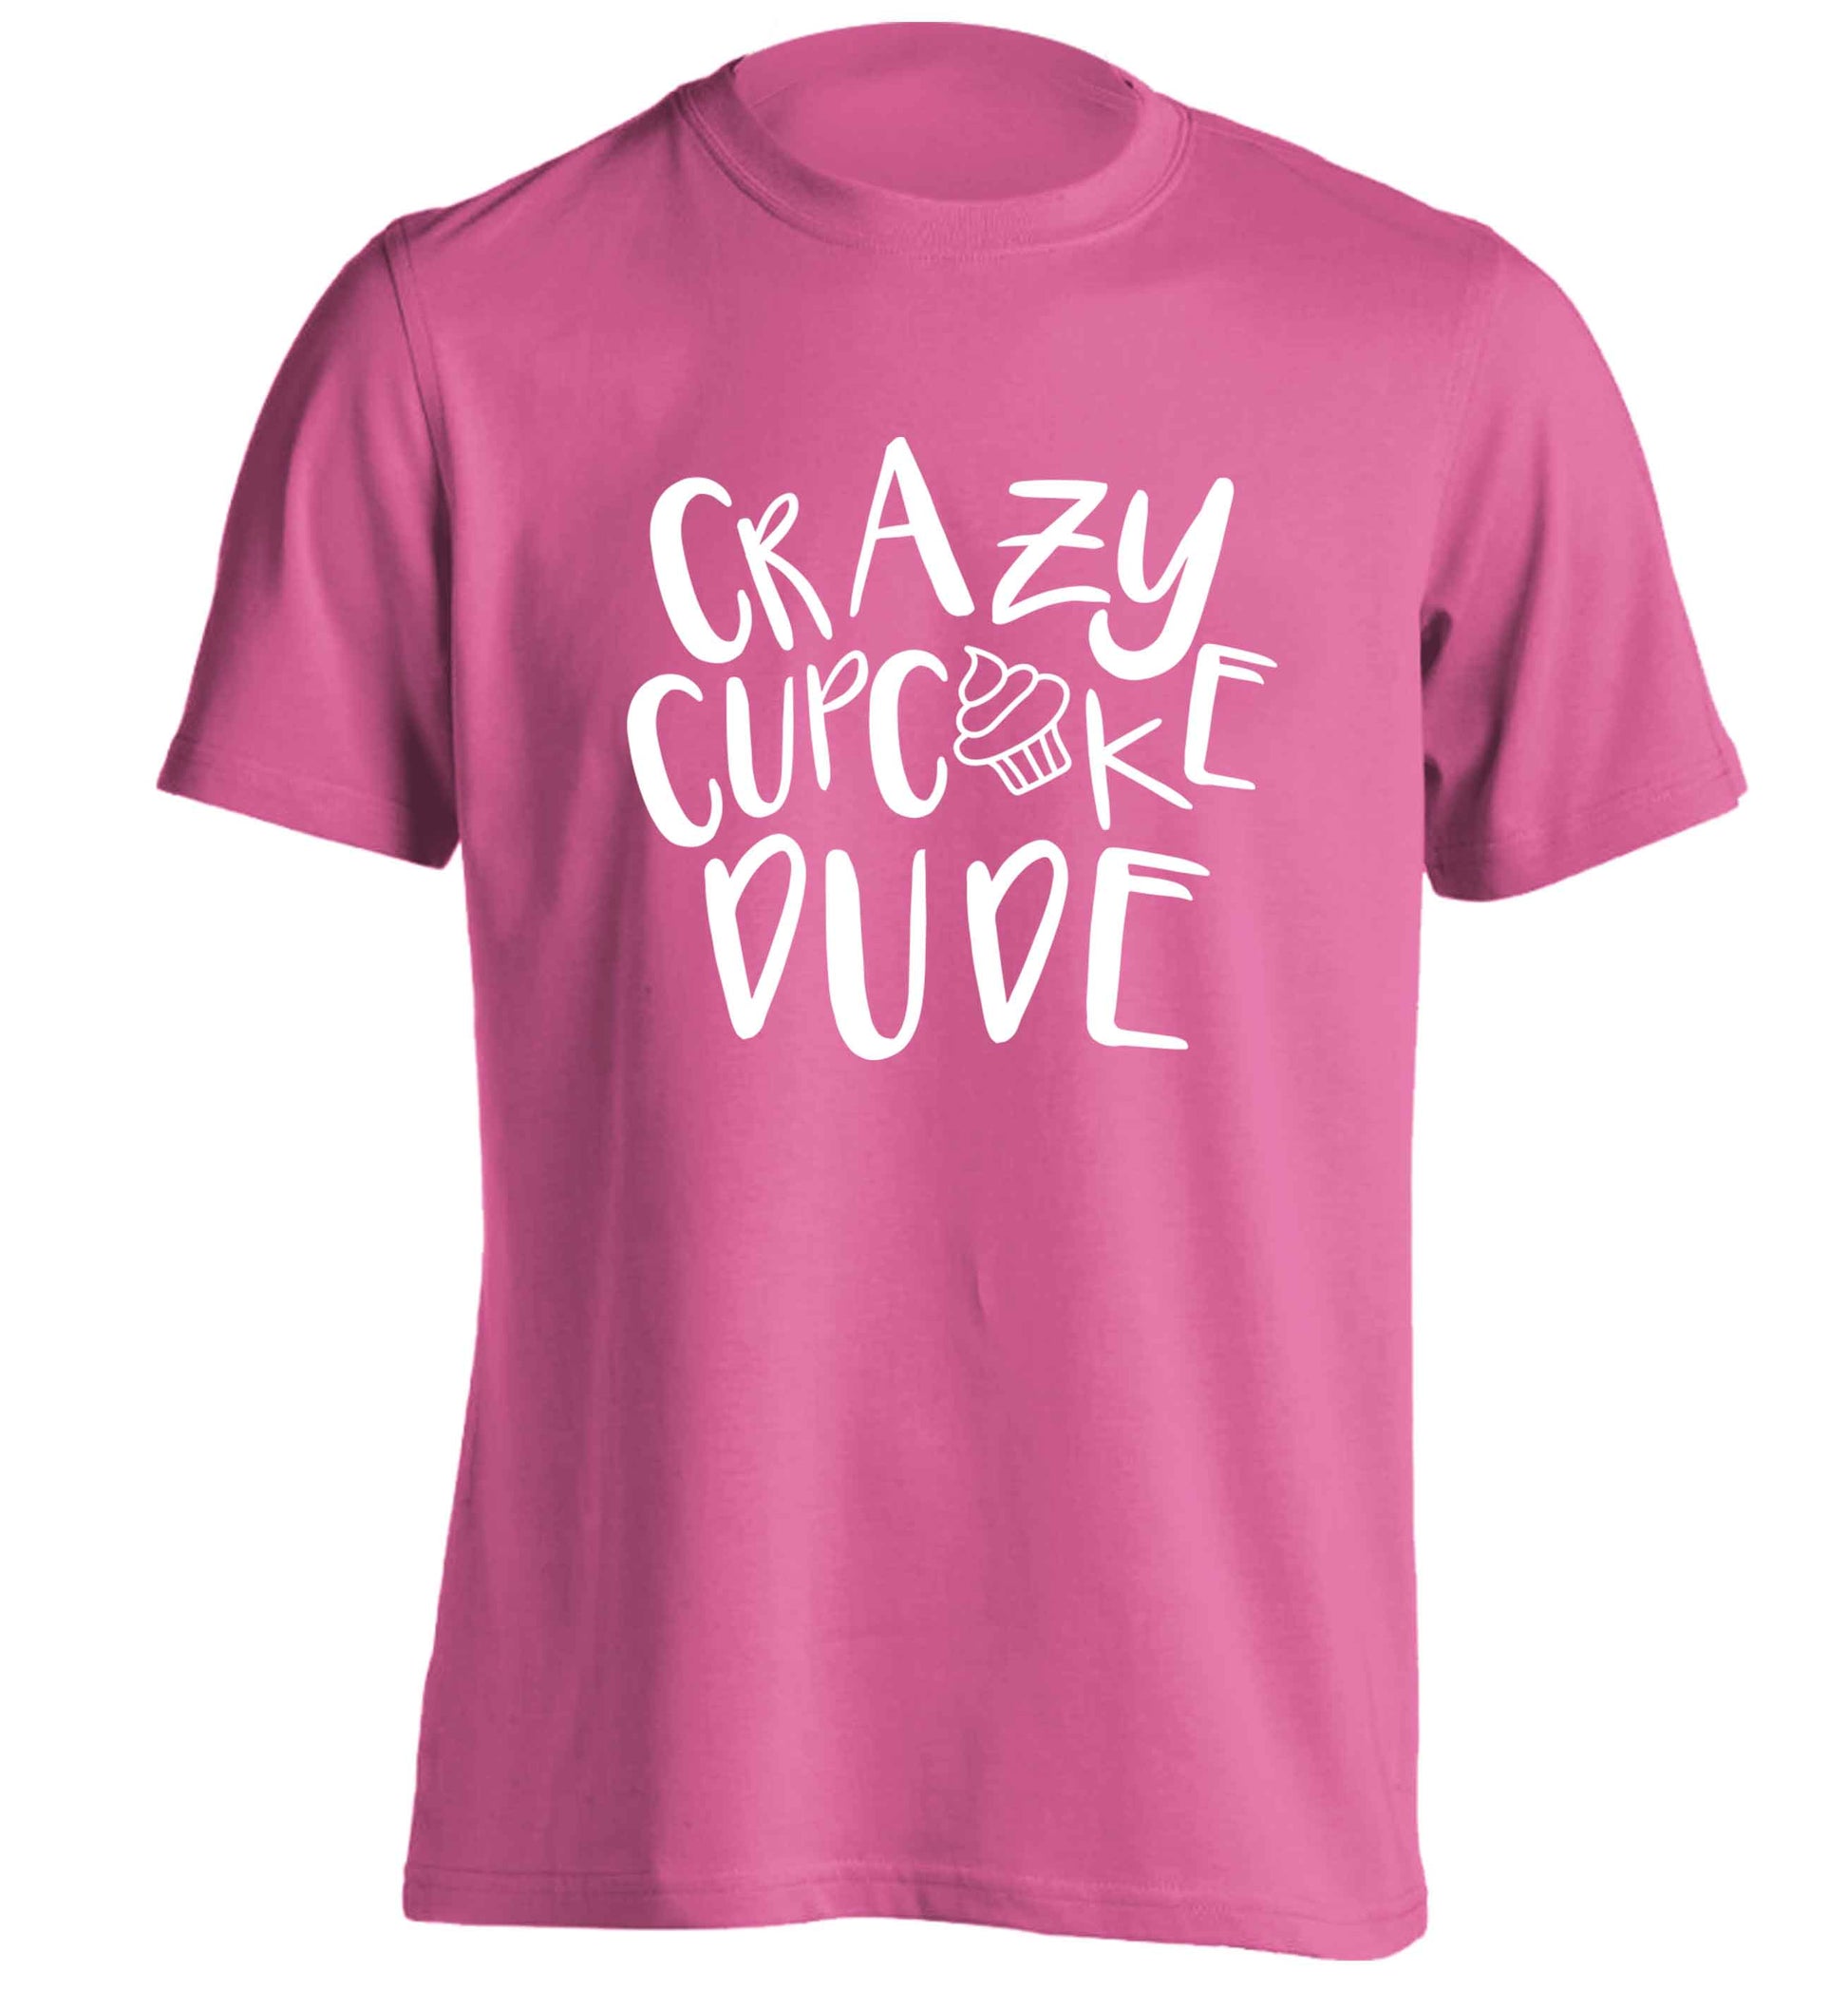 Crazy cupcake dude adults unisex pink Tshirt 2XL